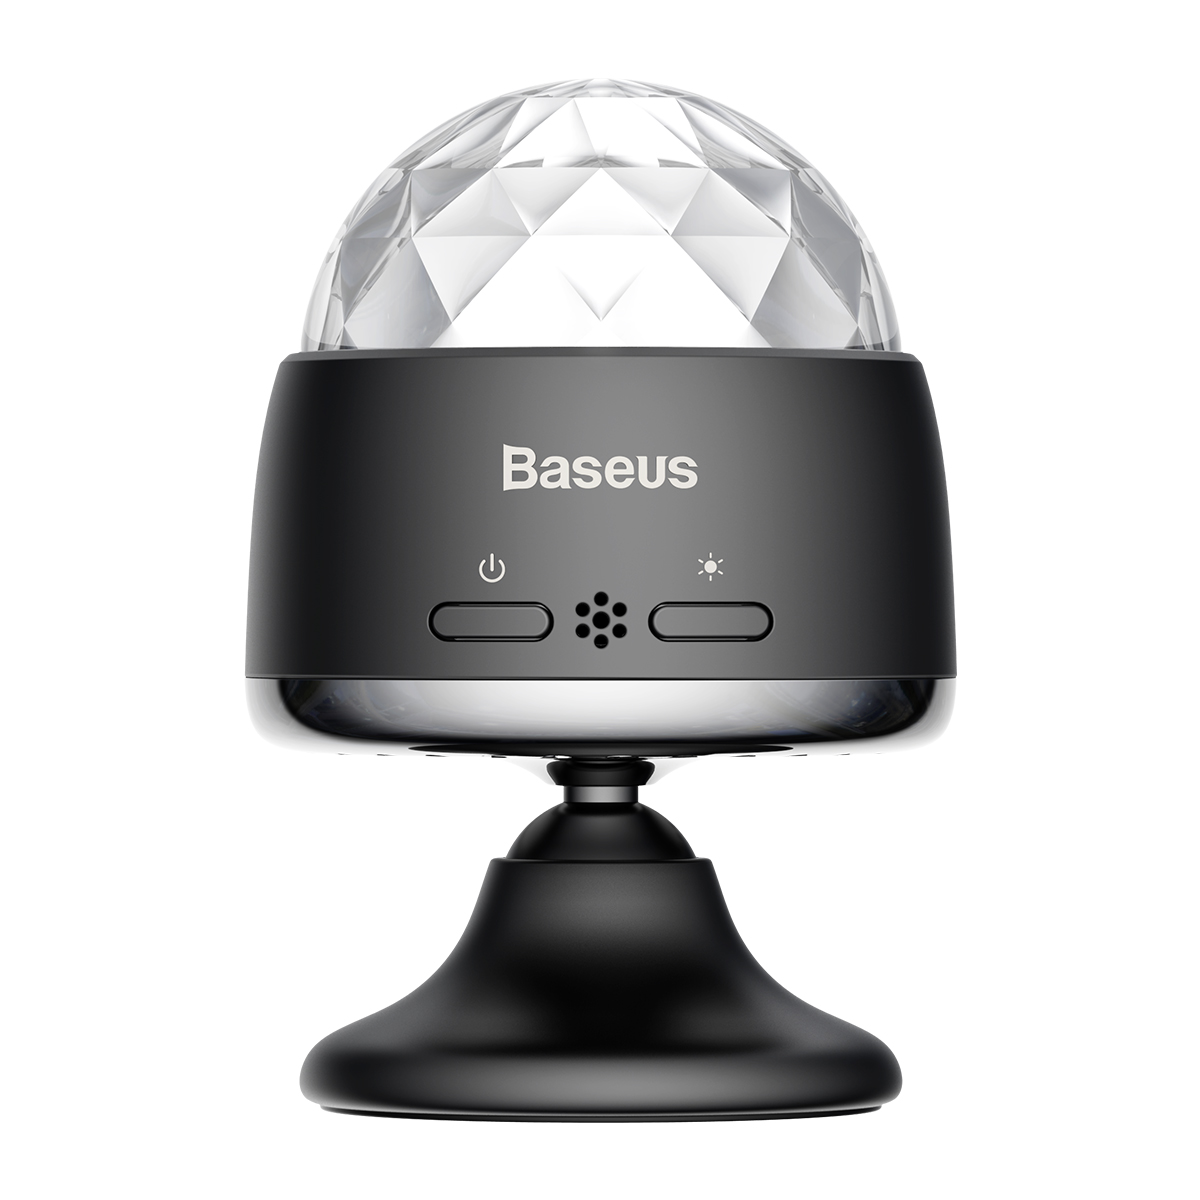 Baseus Rotating Voice Control Car Crystal Magic Ball Light Atmostphere Light